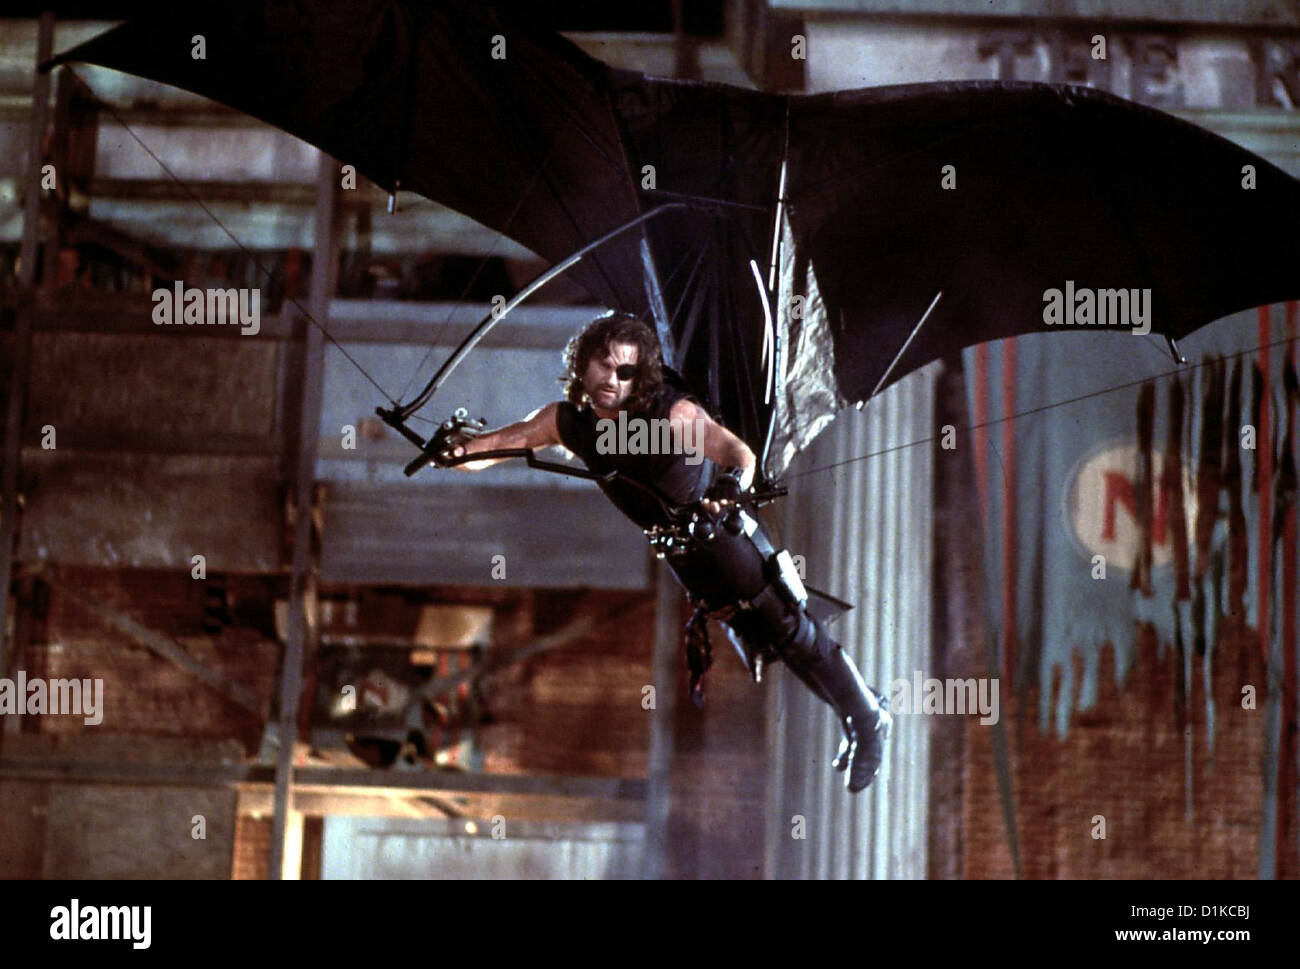 Flucht Aus L.A.   Escape From L.A.   Snake Plissken (Kurt Russell) *** Local Caption *** 1996  Paramount Stock Photo